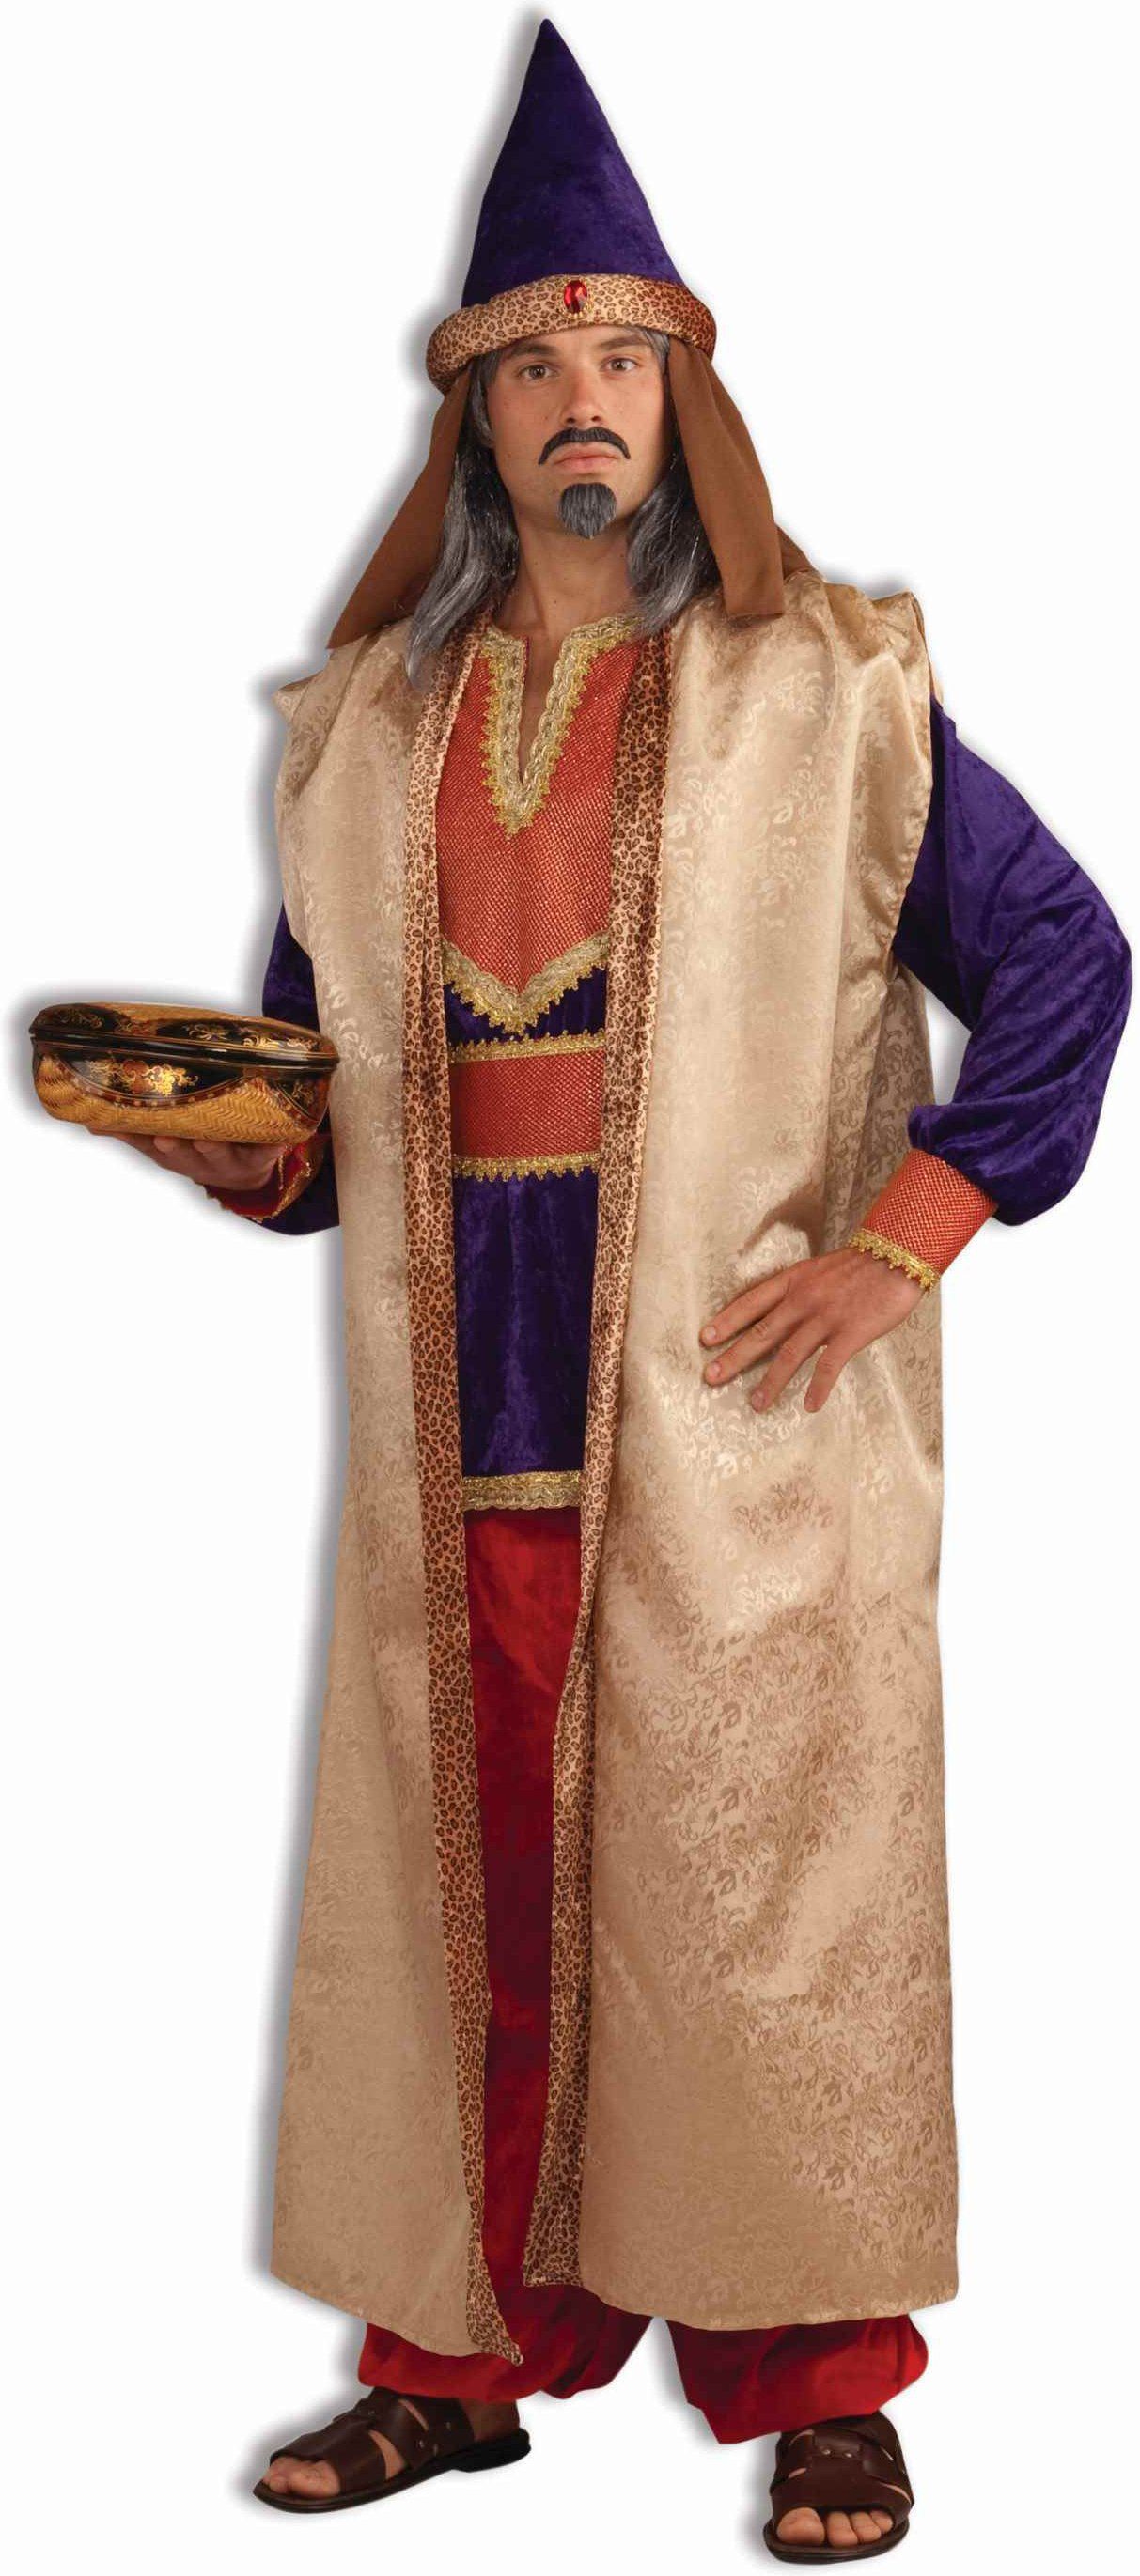 Garnet Wiseman Adult Christmas Biblical Jesus Nativity Costume Holiday